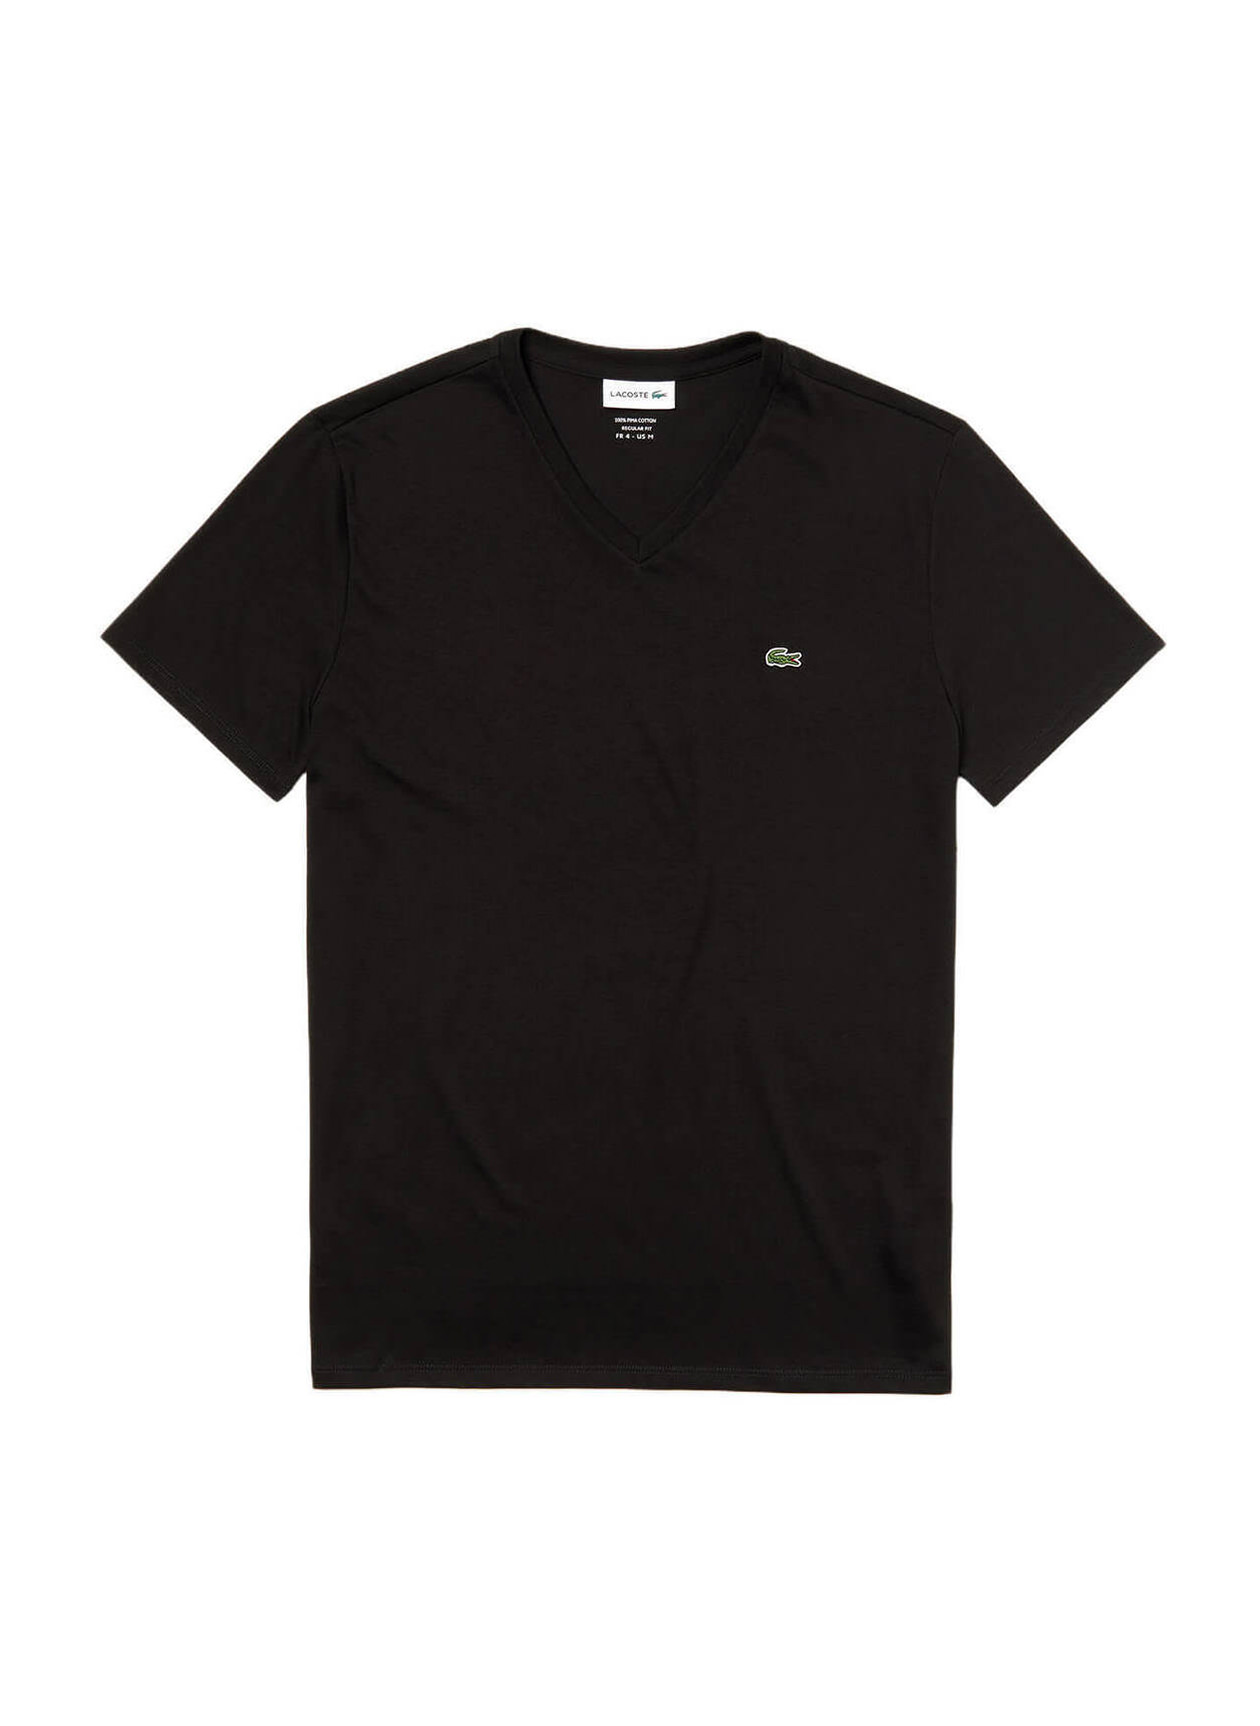 Lacoste Men's Black V-Neck Pima Cotton T-Shirt